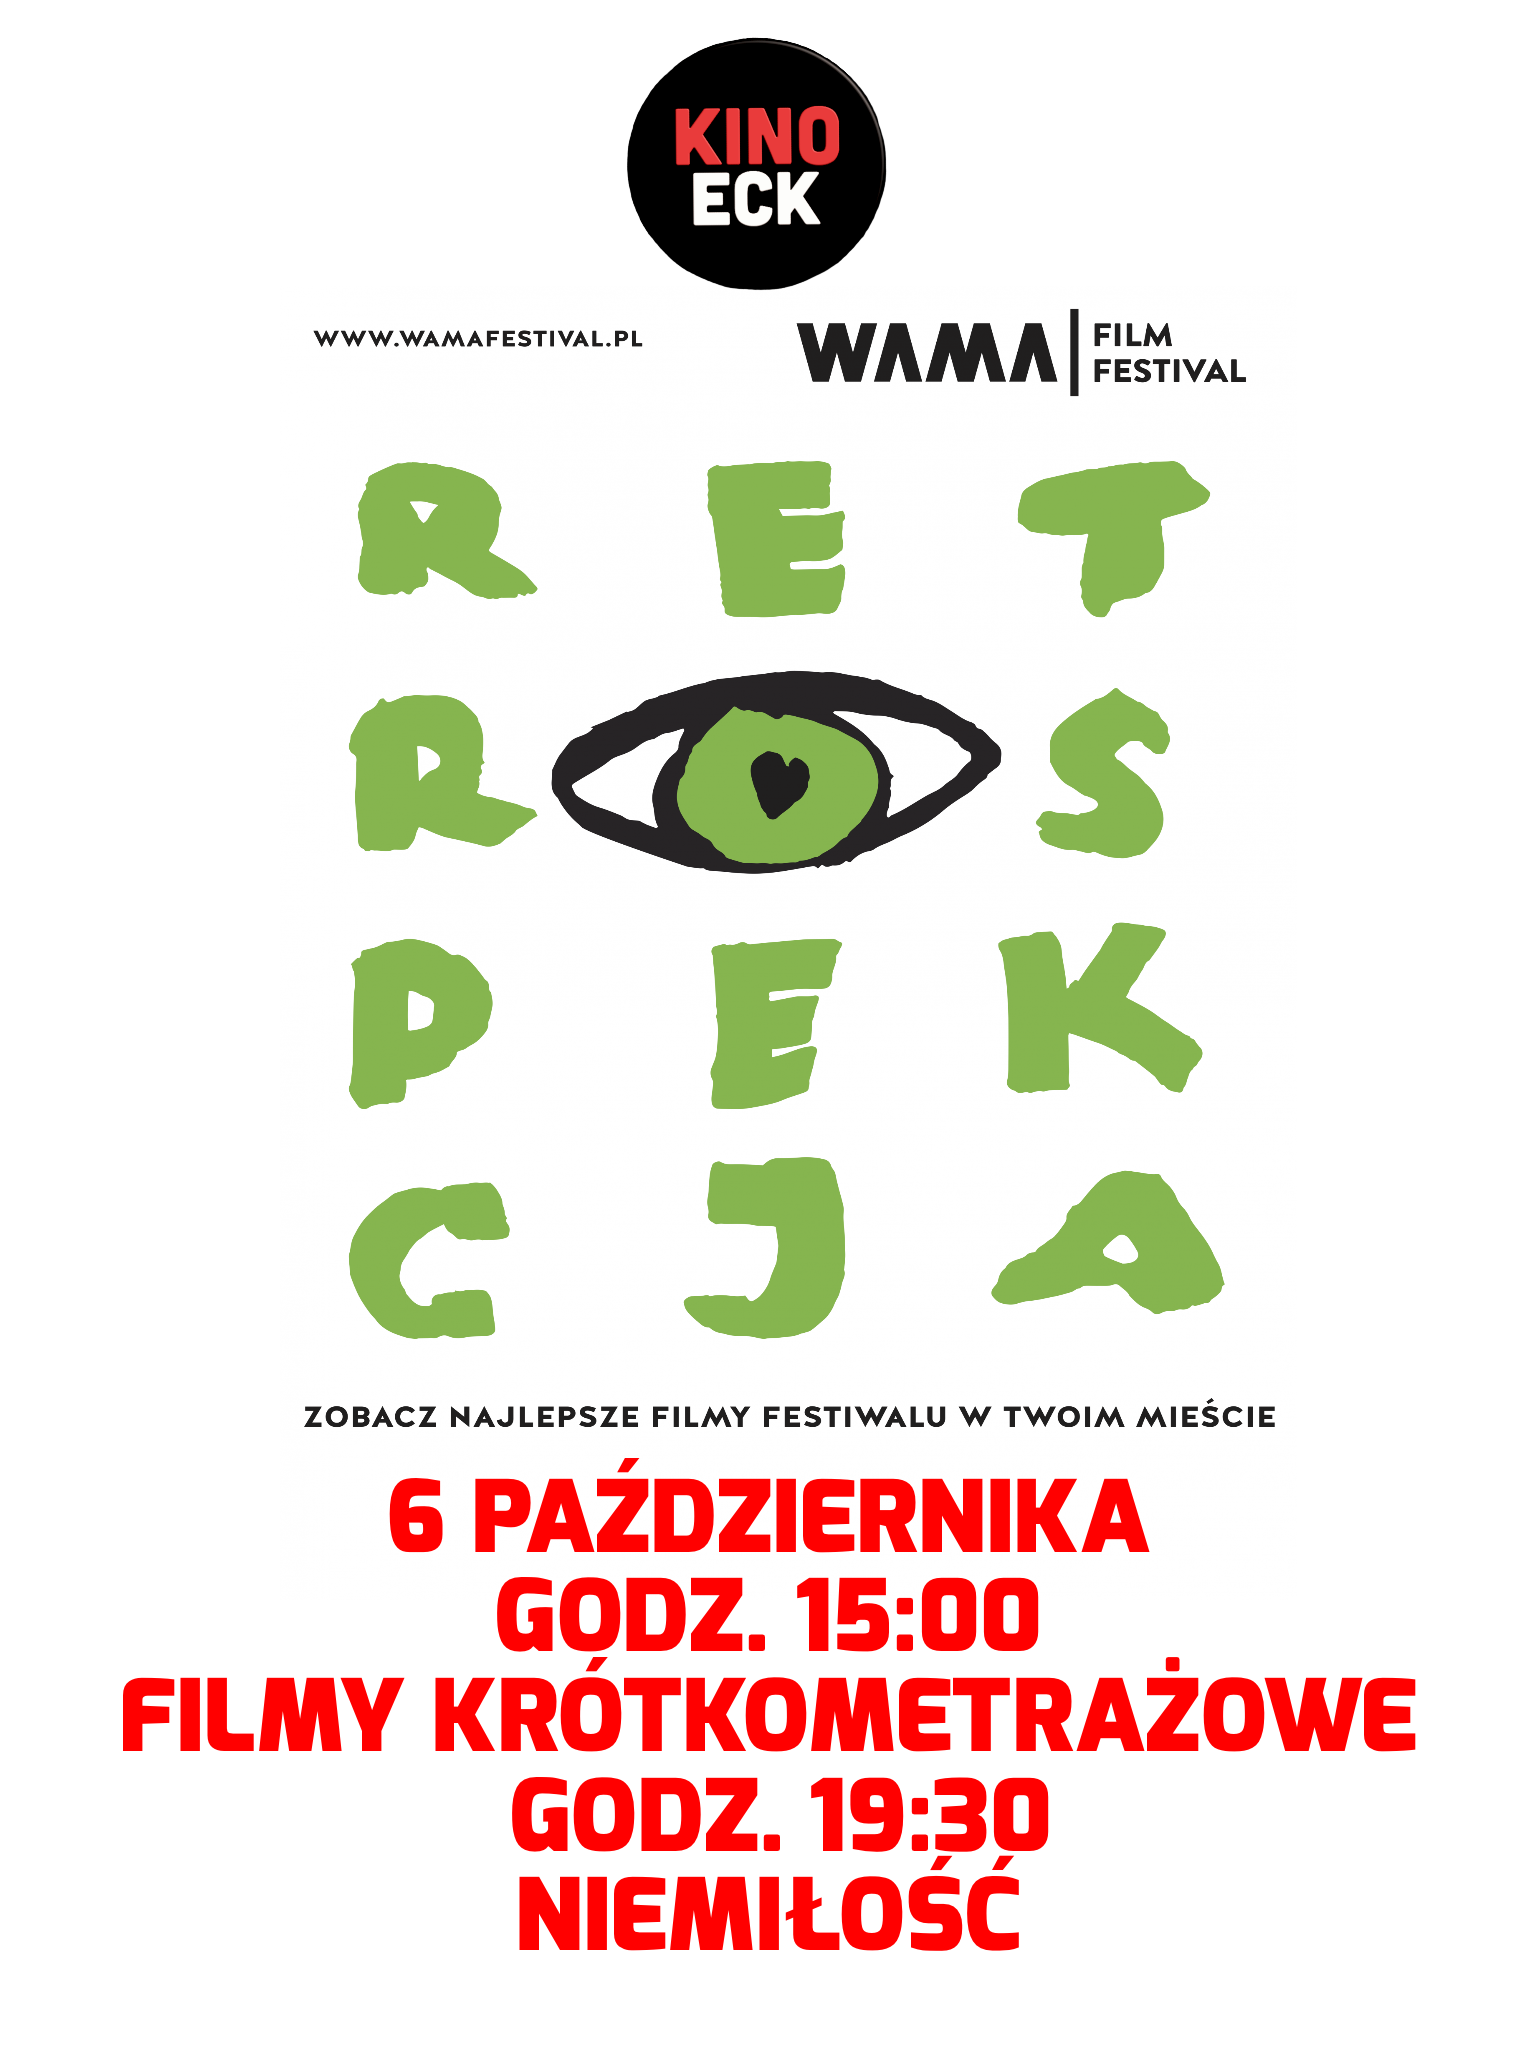 WAMA Film Festival – RETROSPEKCJA